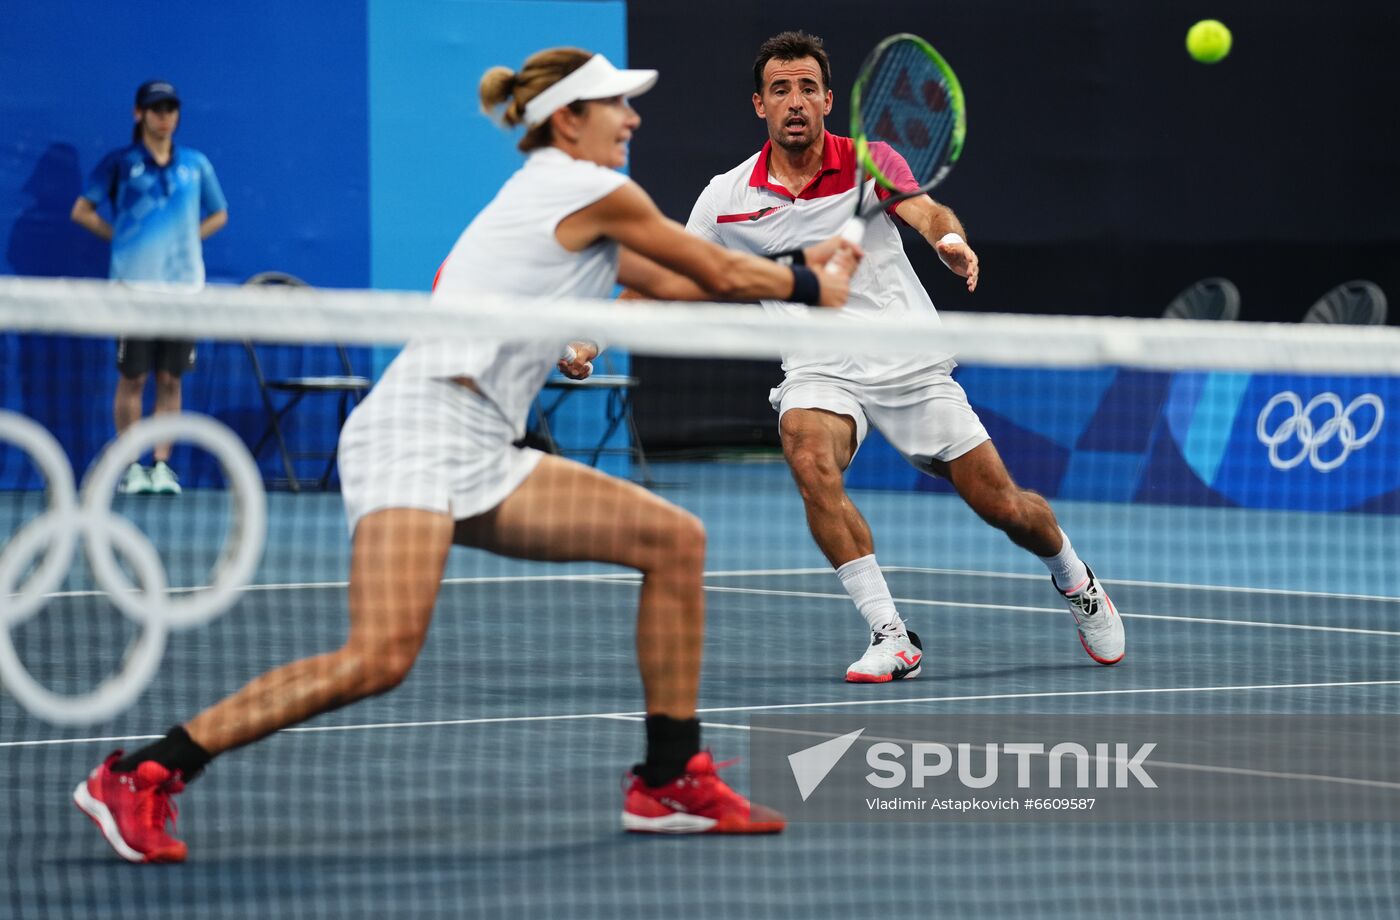 Japan Olympics 2020 Tennis Mixed Jurak/Dodig - Pavlyuchenkova/Rublev